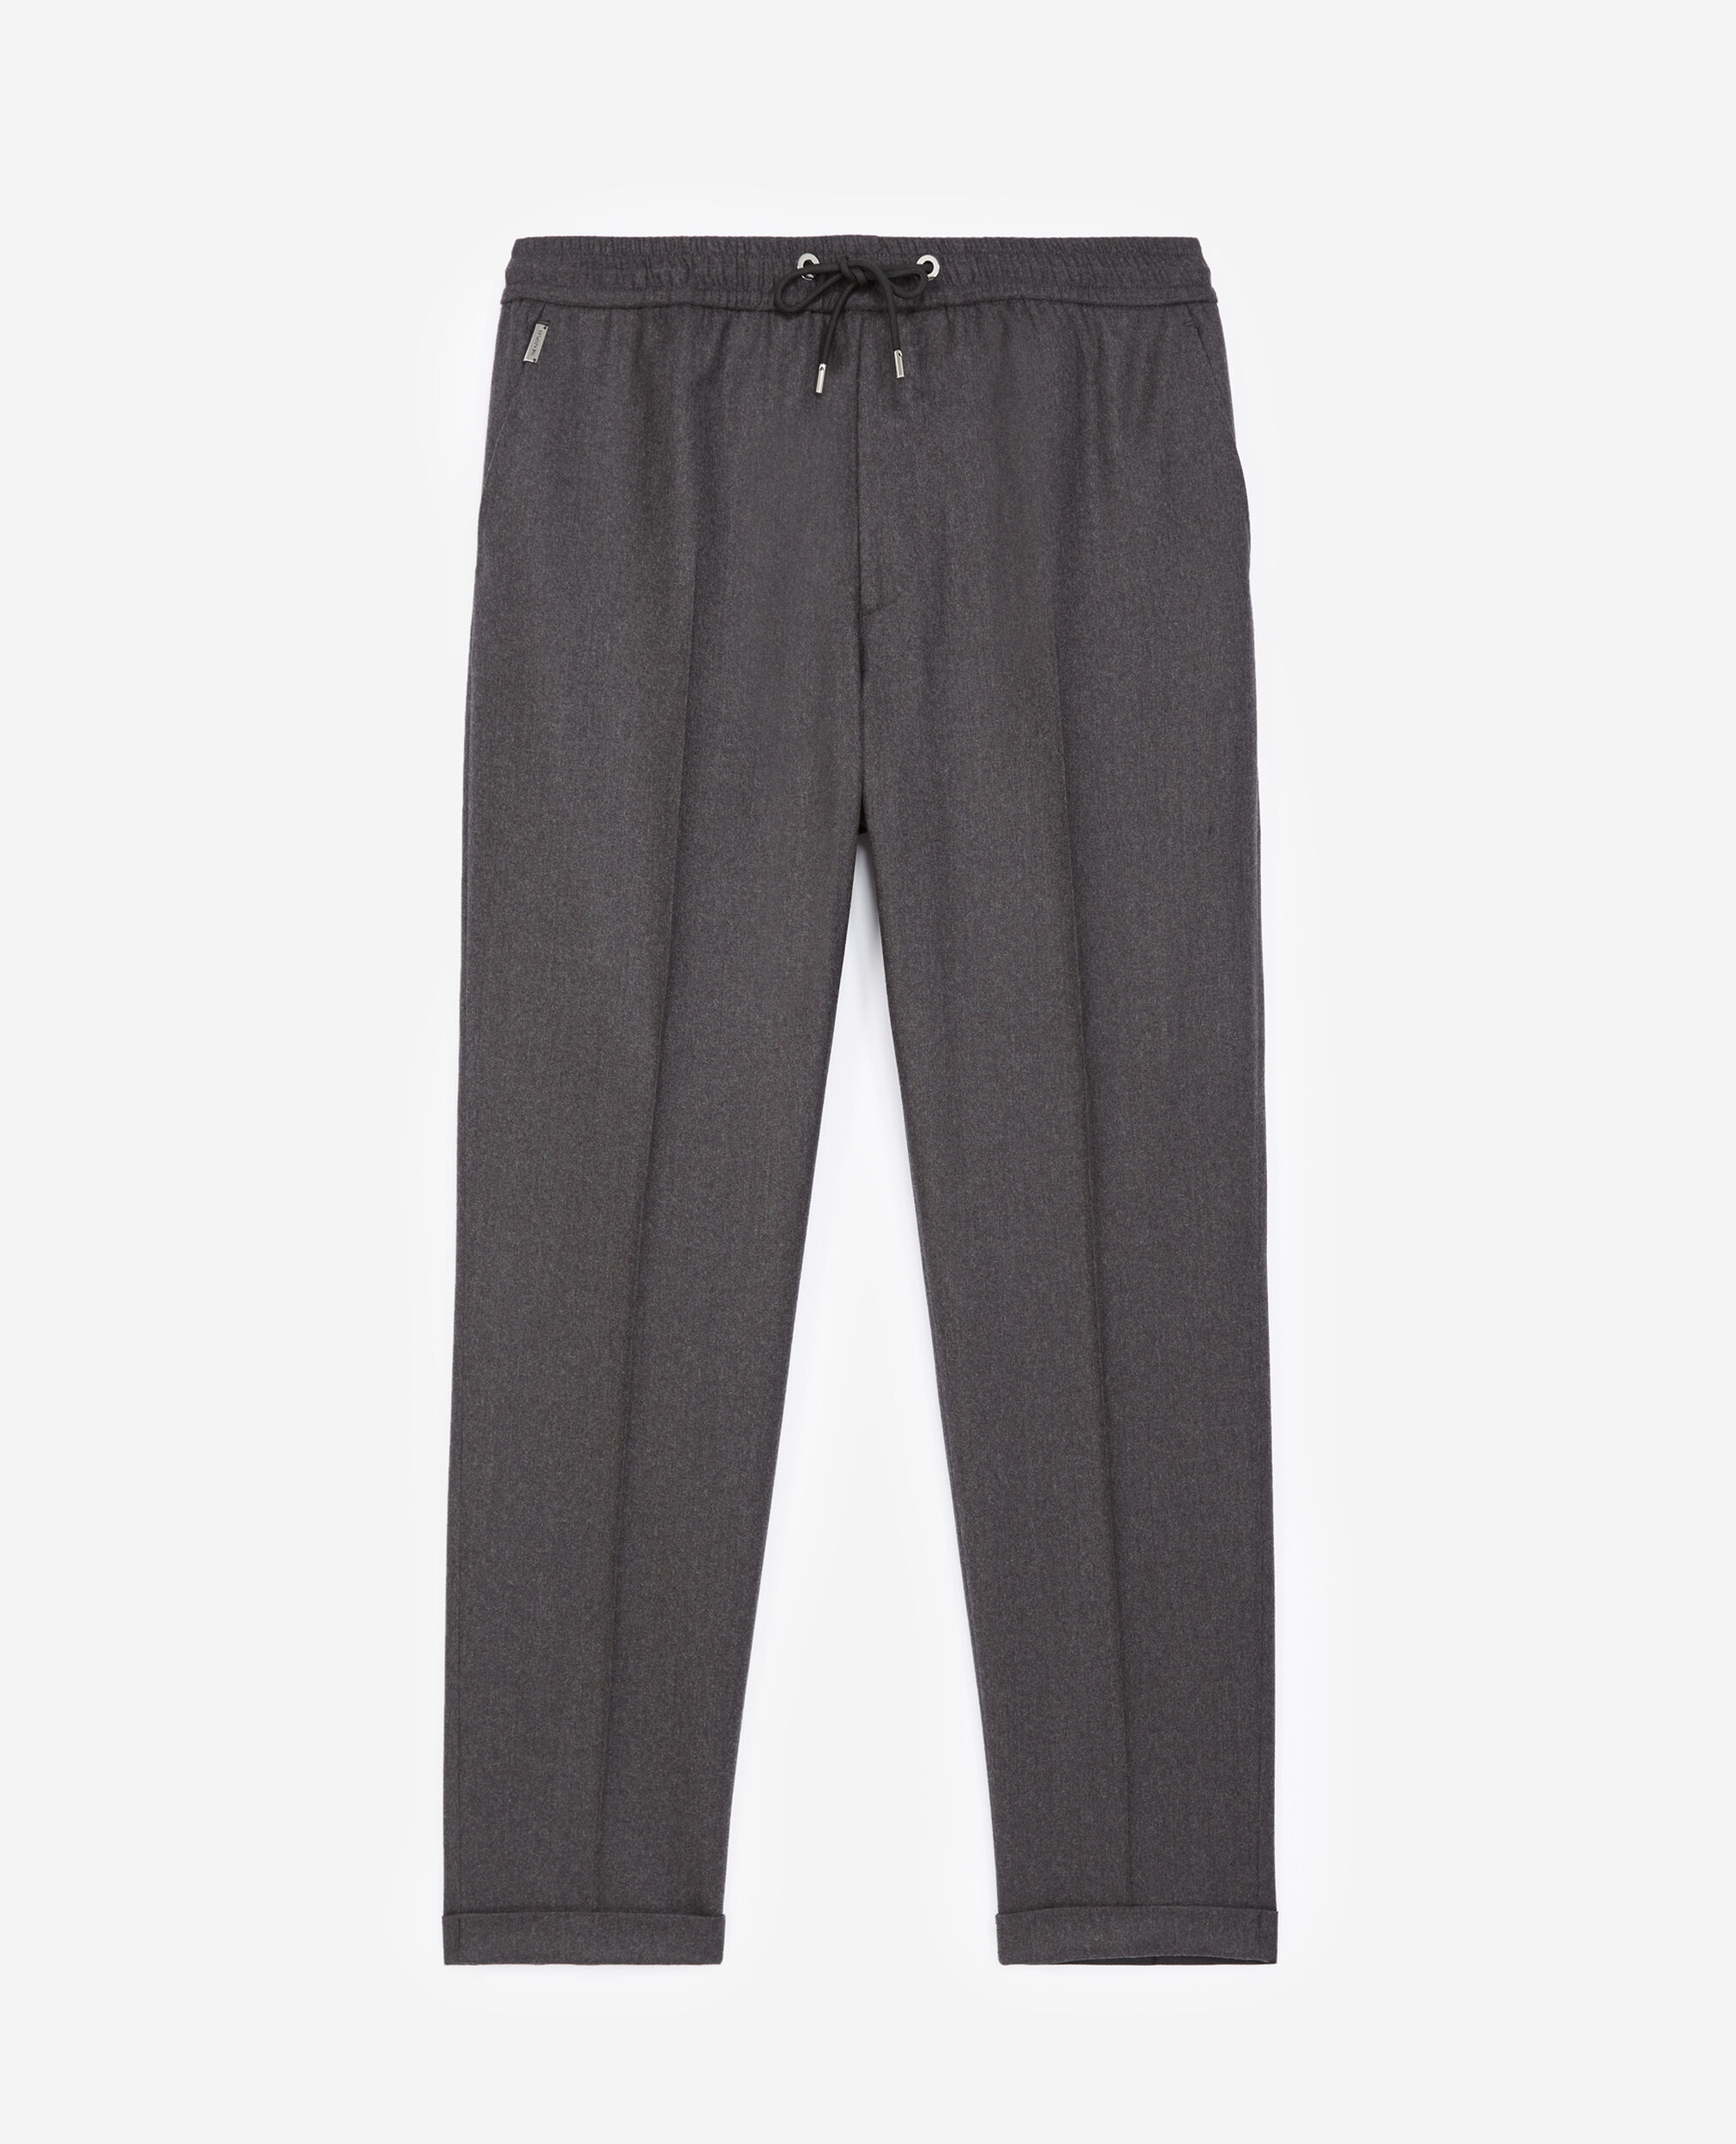 Gray wool pants with elastic band